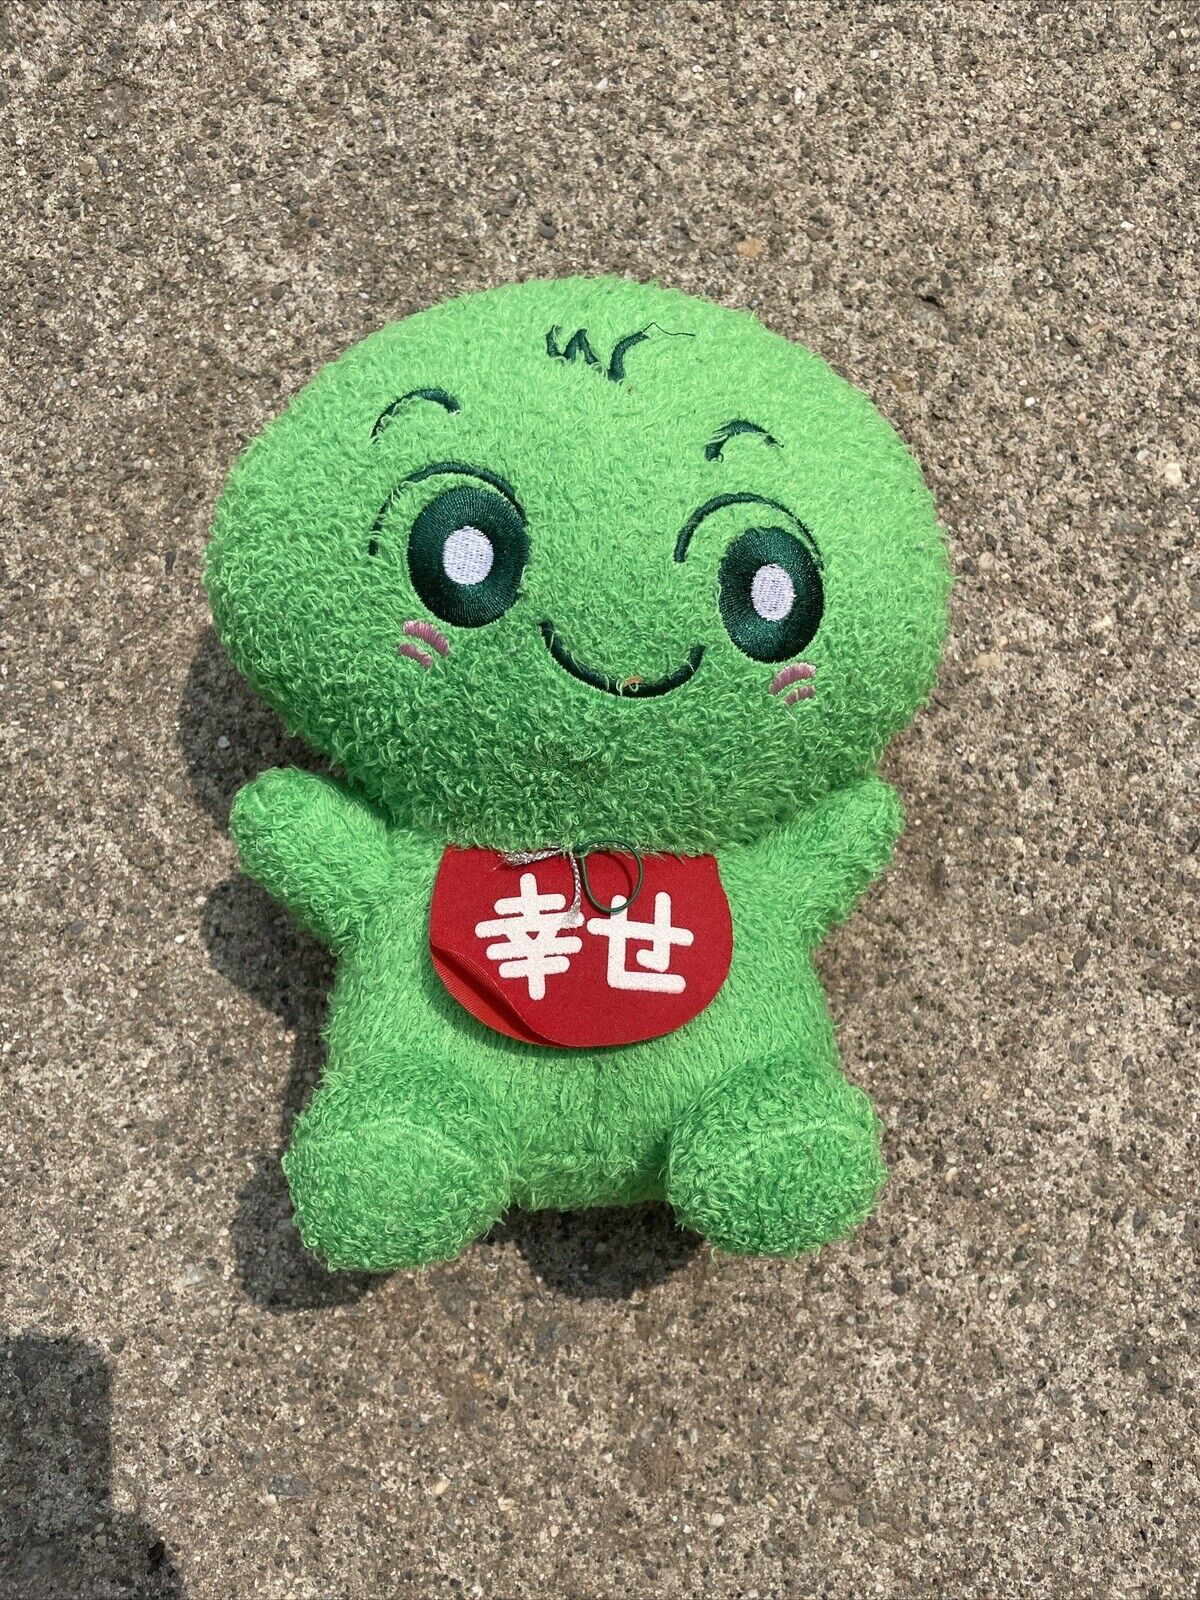 Rare Hokkaido Mari Mari Marimo Plush Toy Stuffed Animal Green Doll Japan 3.2 VTG